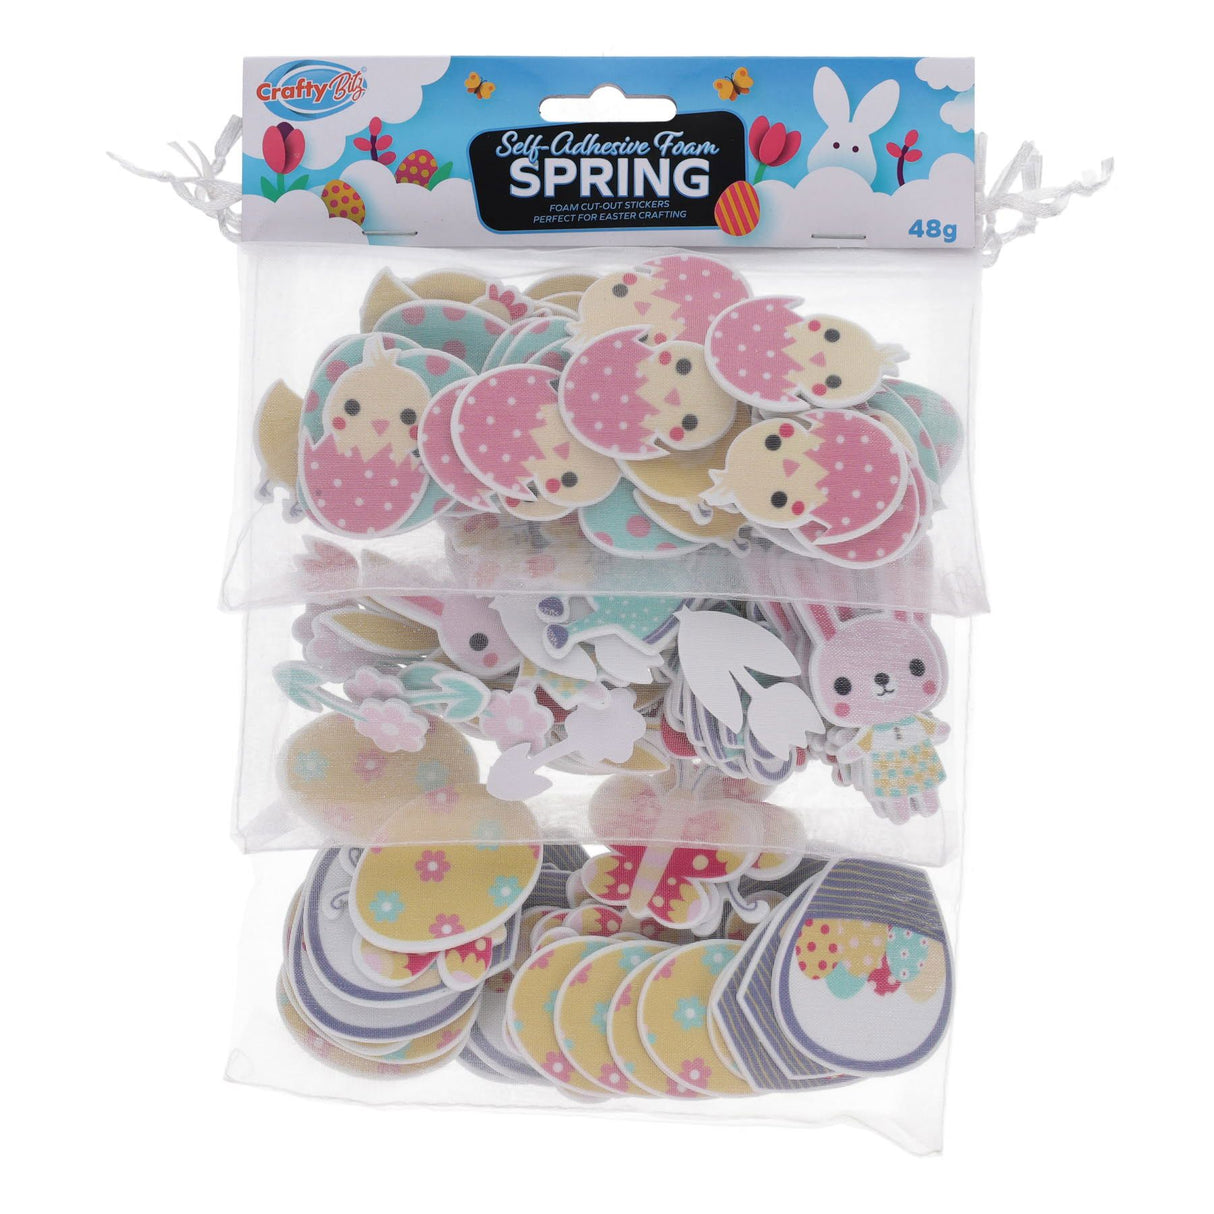 Crafty Bitz Foam Spring Self-Adhesive Stickers - 48g Bag | Stationery Shop UK